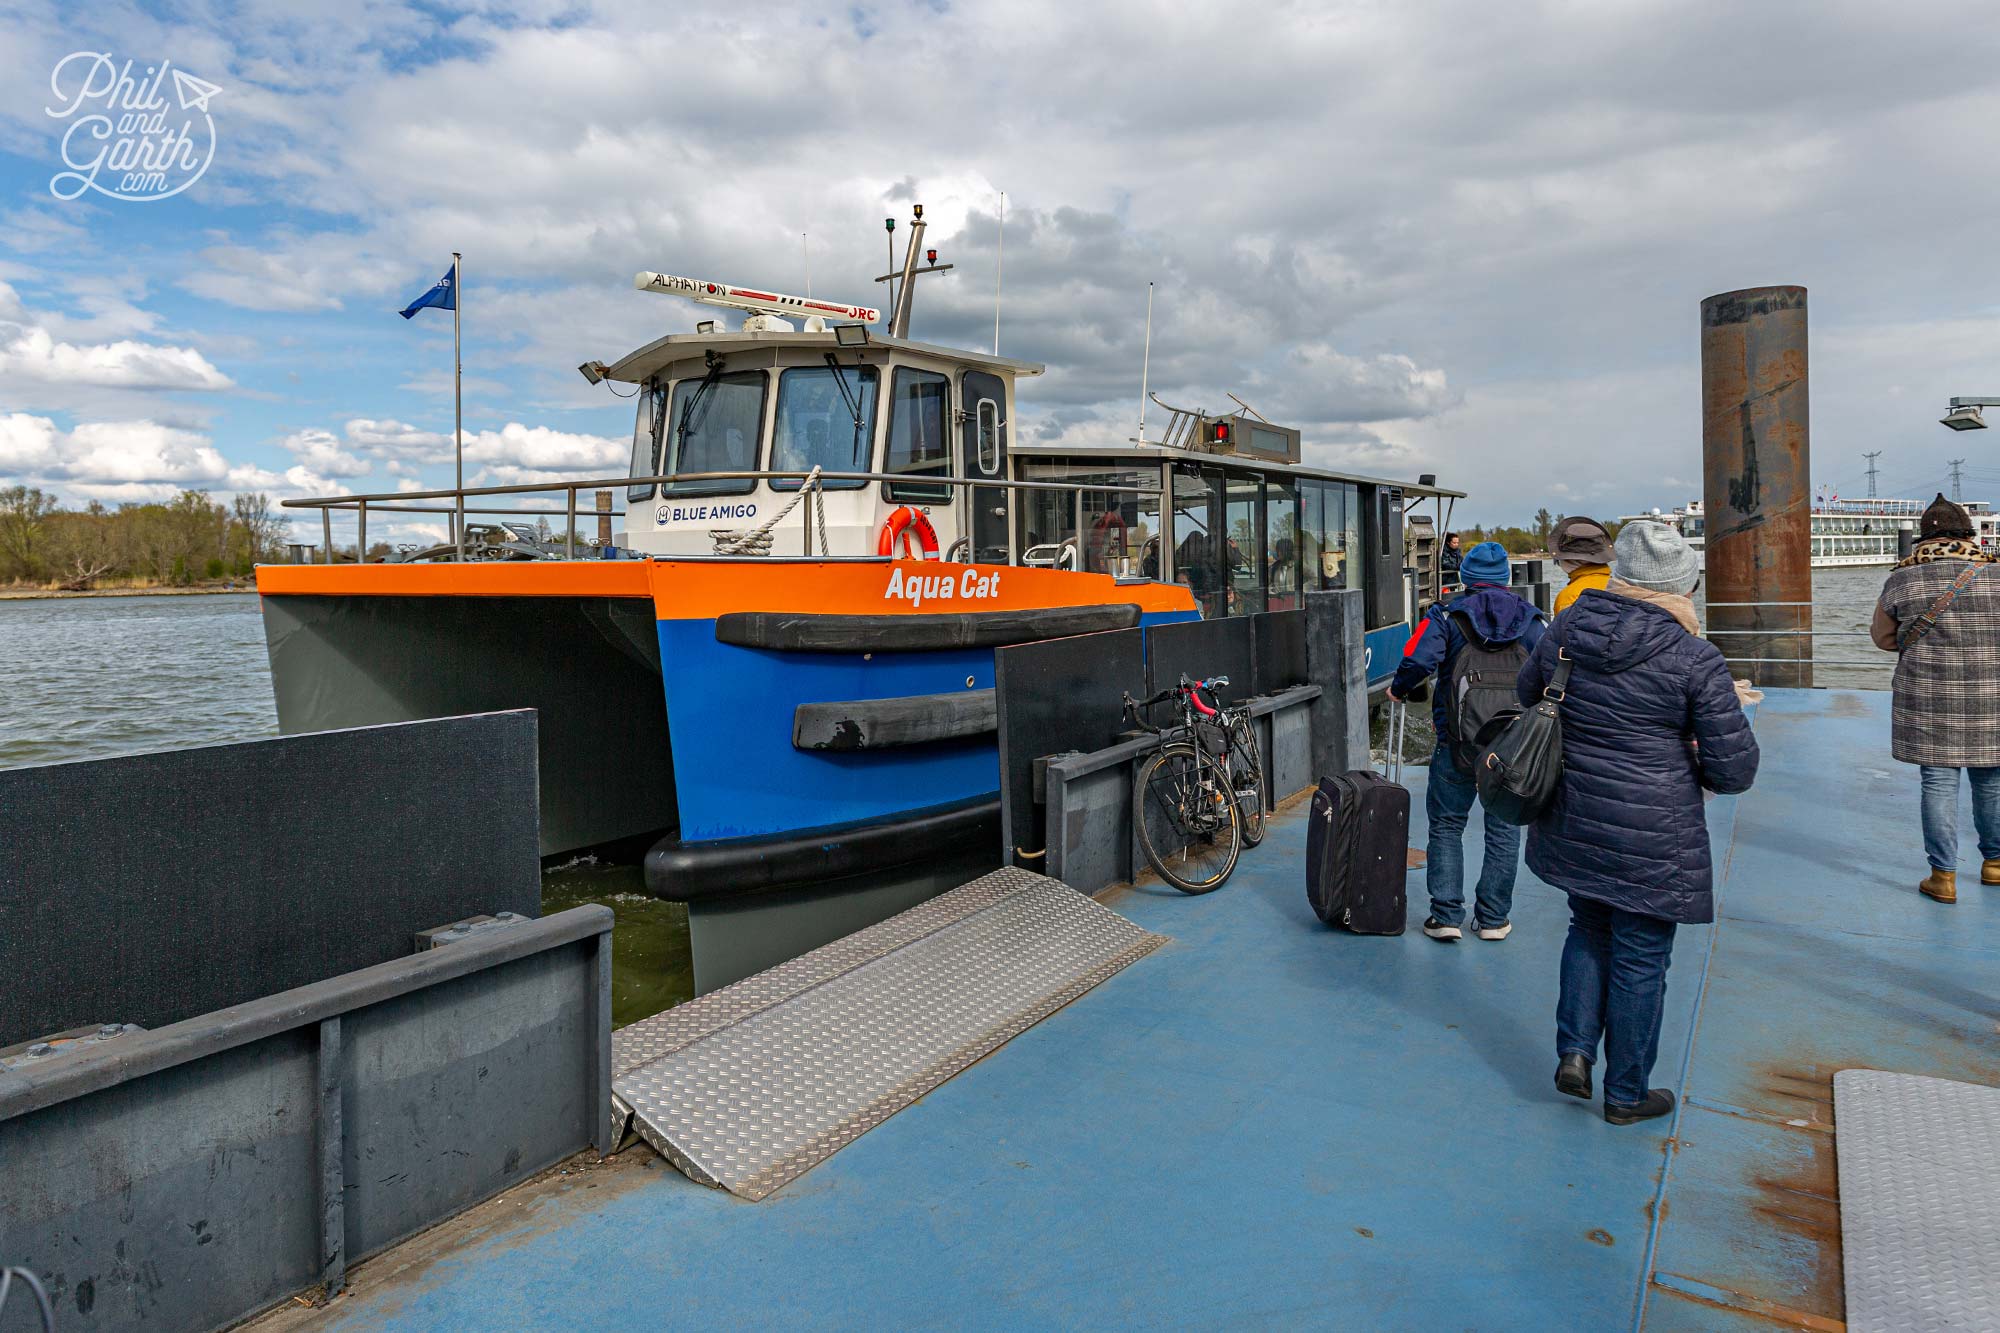 The Blue Amigo Waterbus ferry from Kinderdijk to Rotterdam